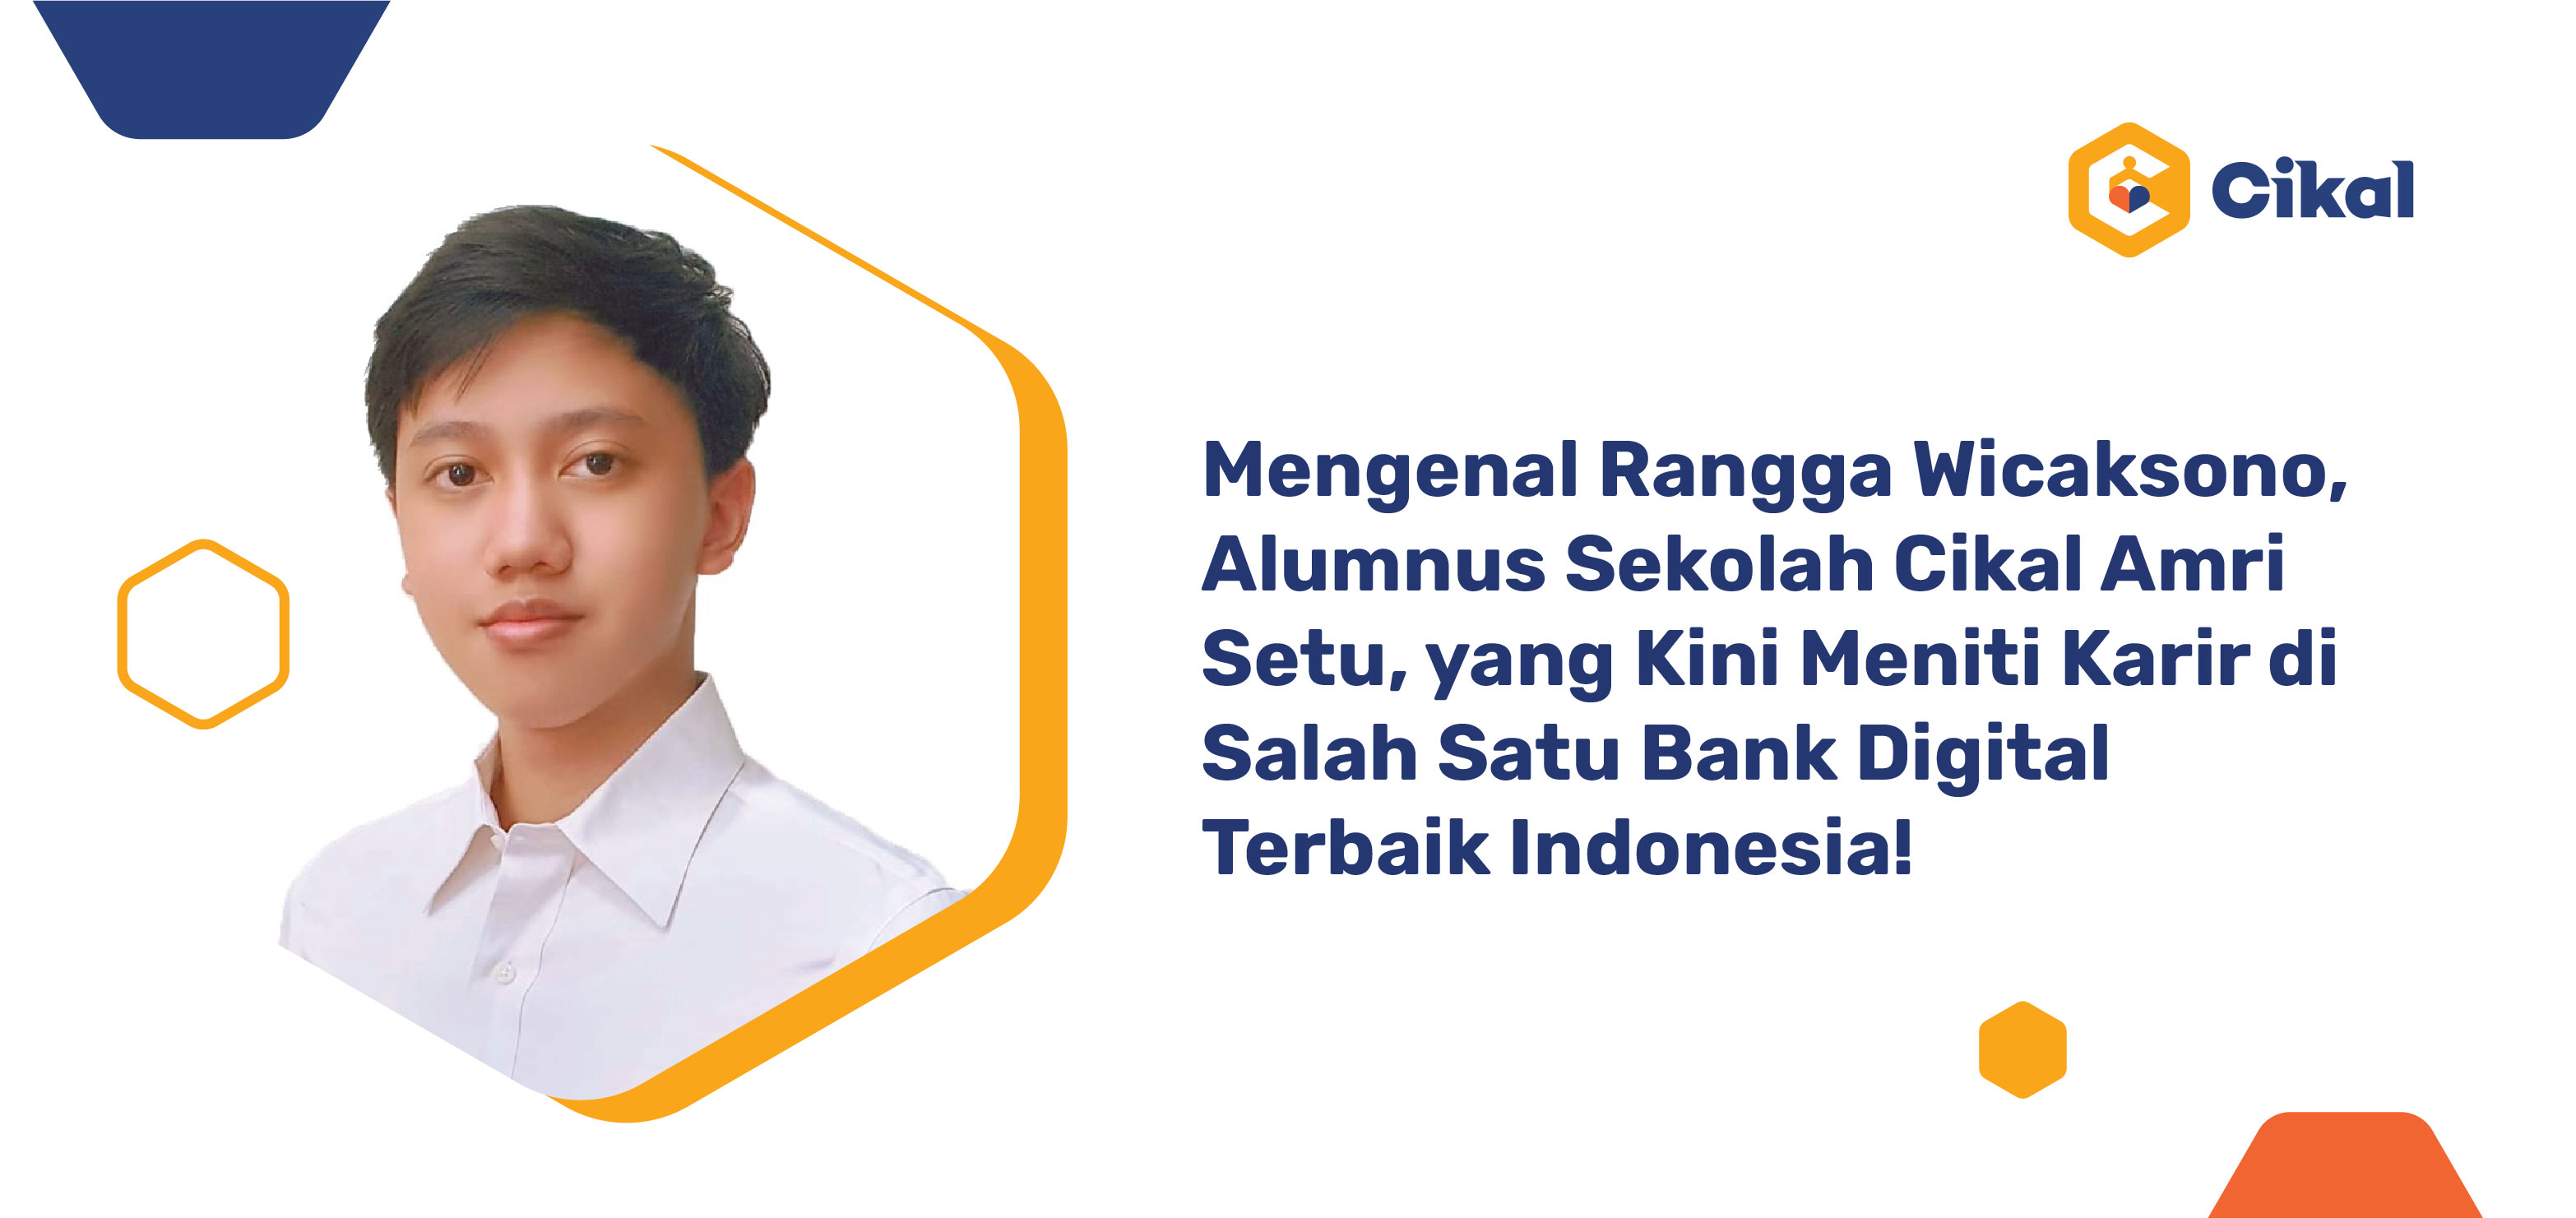 Mengenal Rangga Wicaksono, Alumnus Sekolah Cikal Amri Setu, yang Kini Meniti Karir di Salah Satu Bank Digital Terbaik Indonesia!